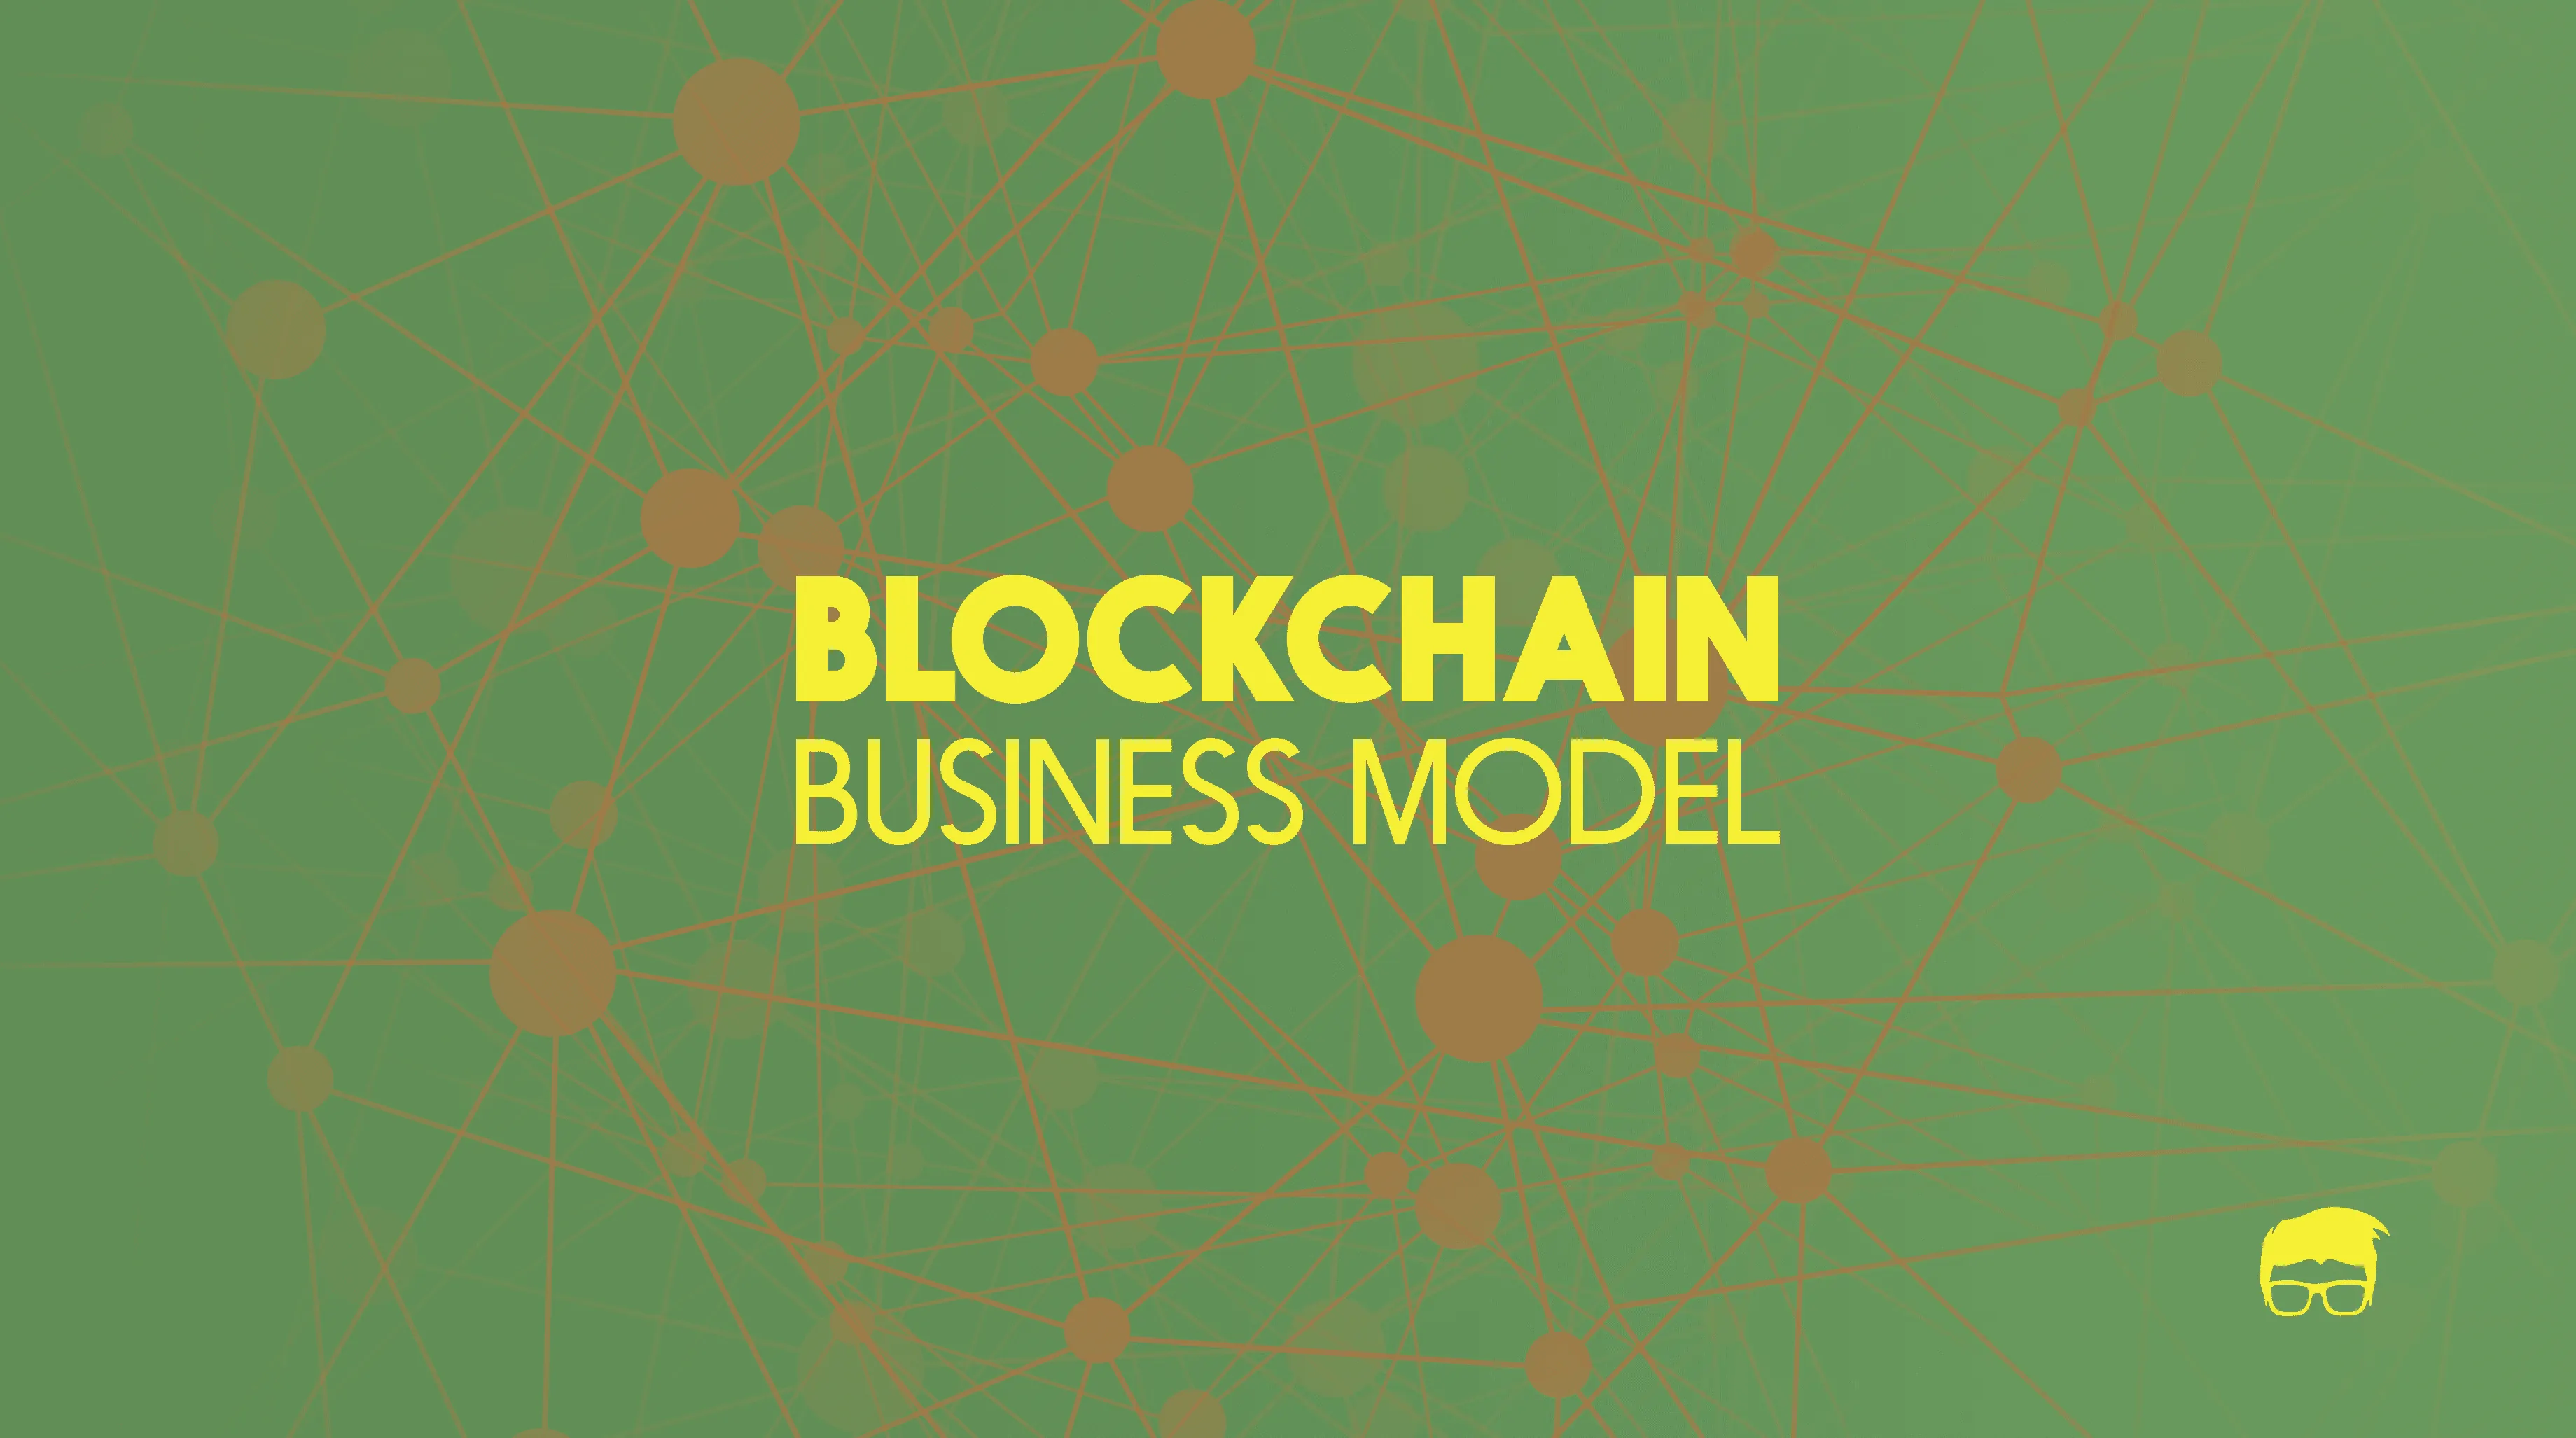 The Blockchain Business Model